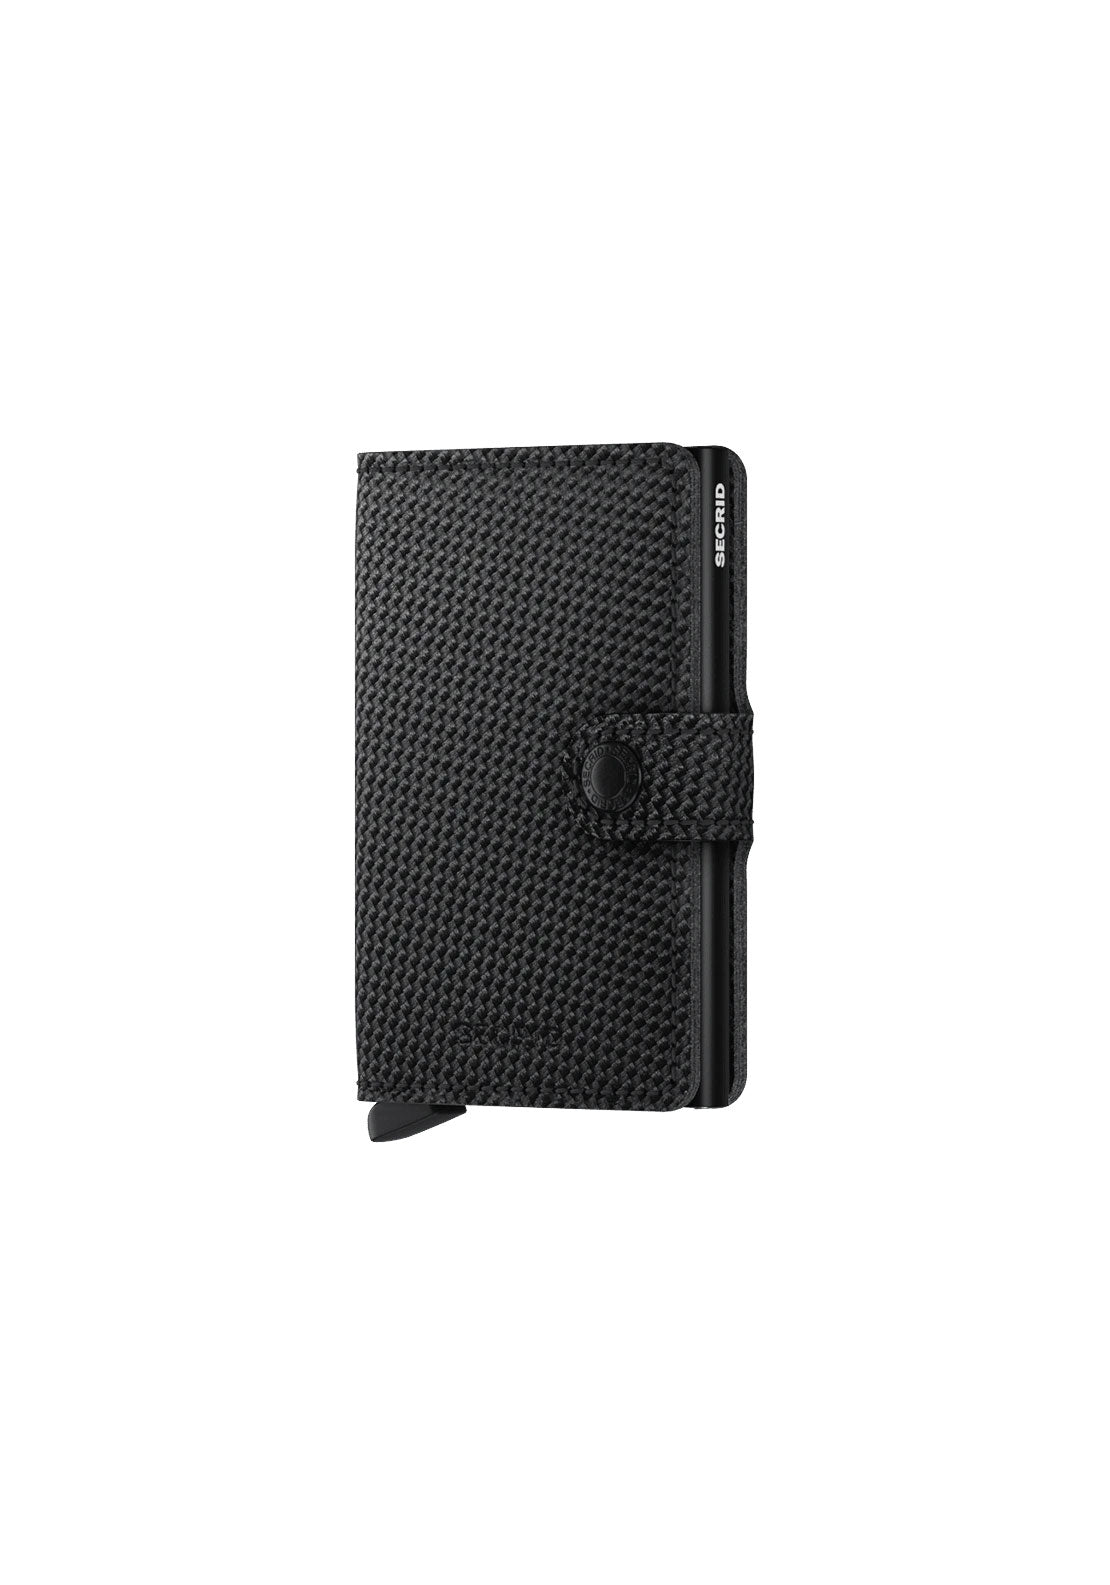 Secrid Mini Carbon Wallet - Black 1 Shaws Department Stores